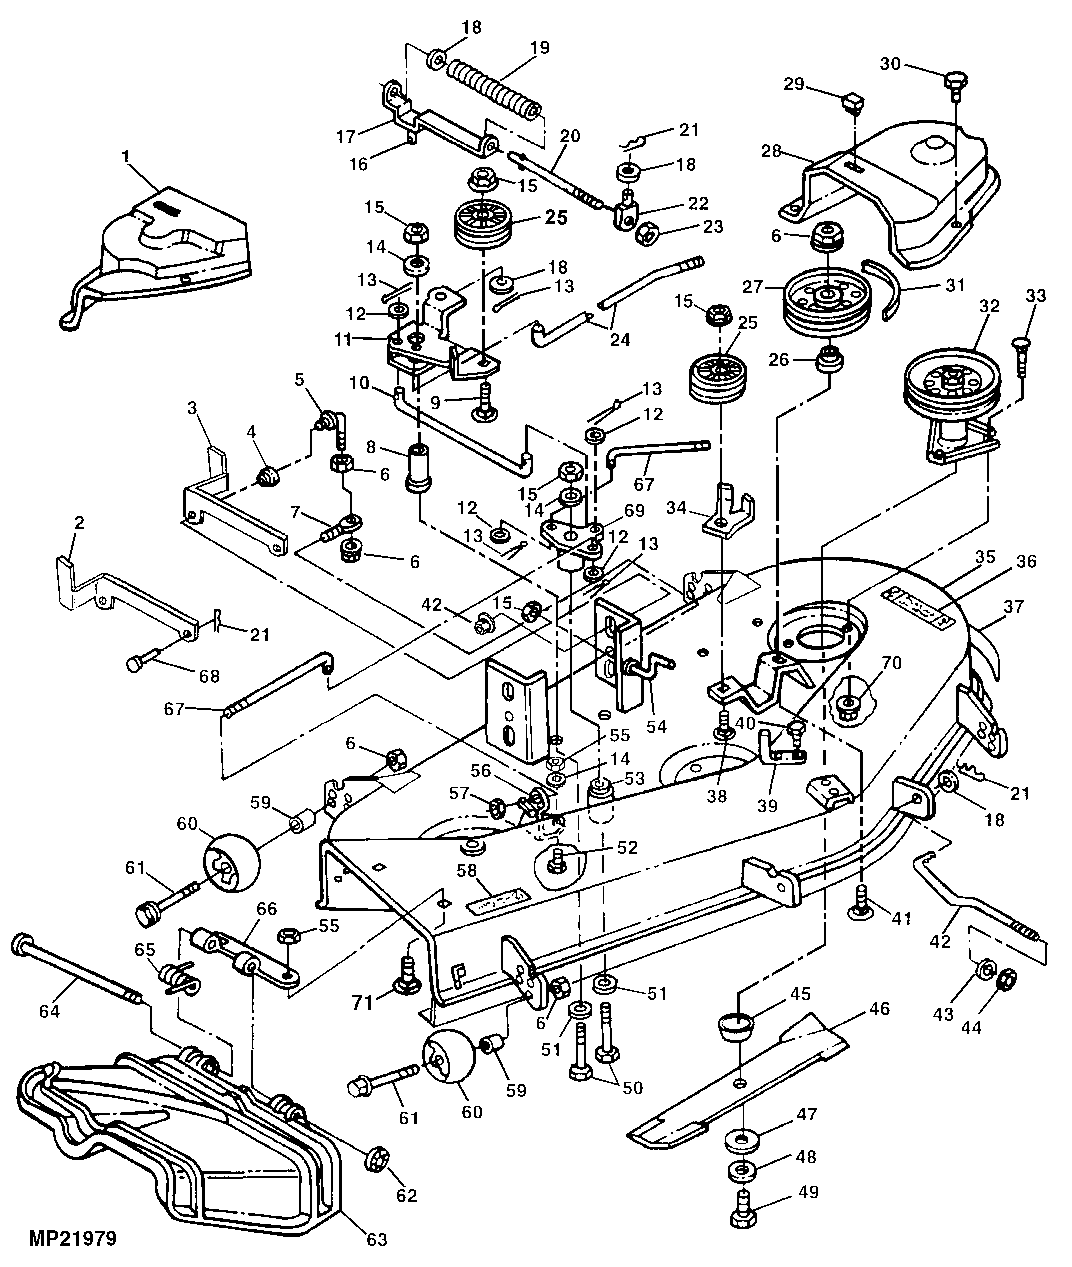 john deere lt180 parts diagram